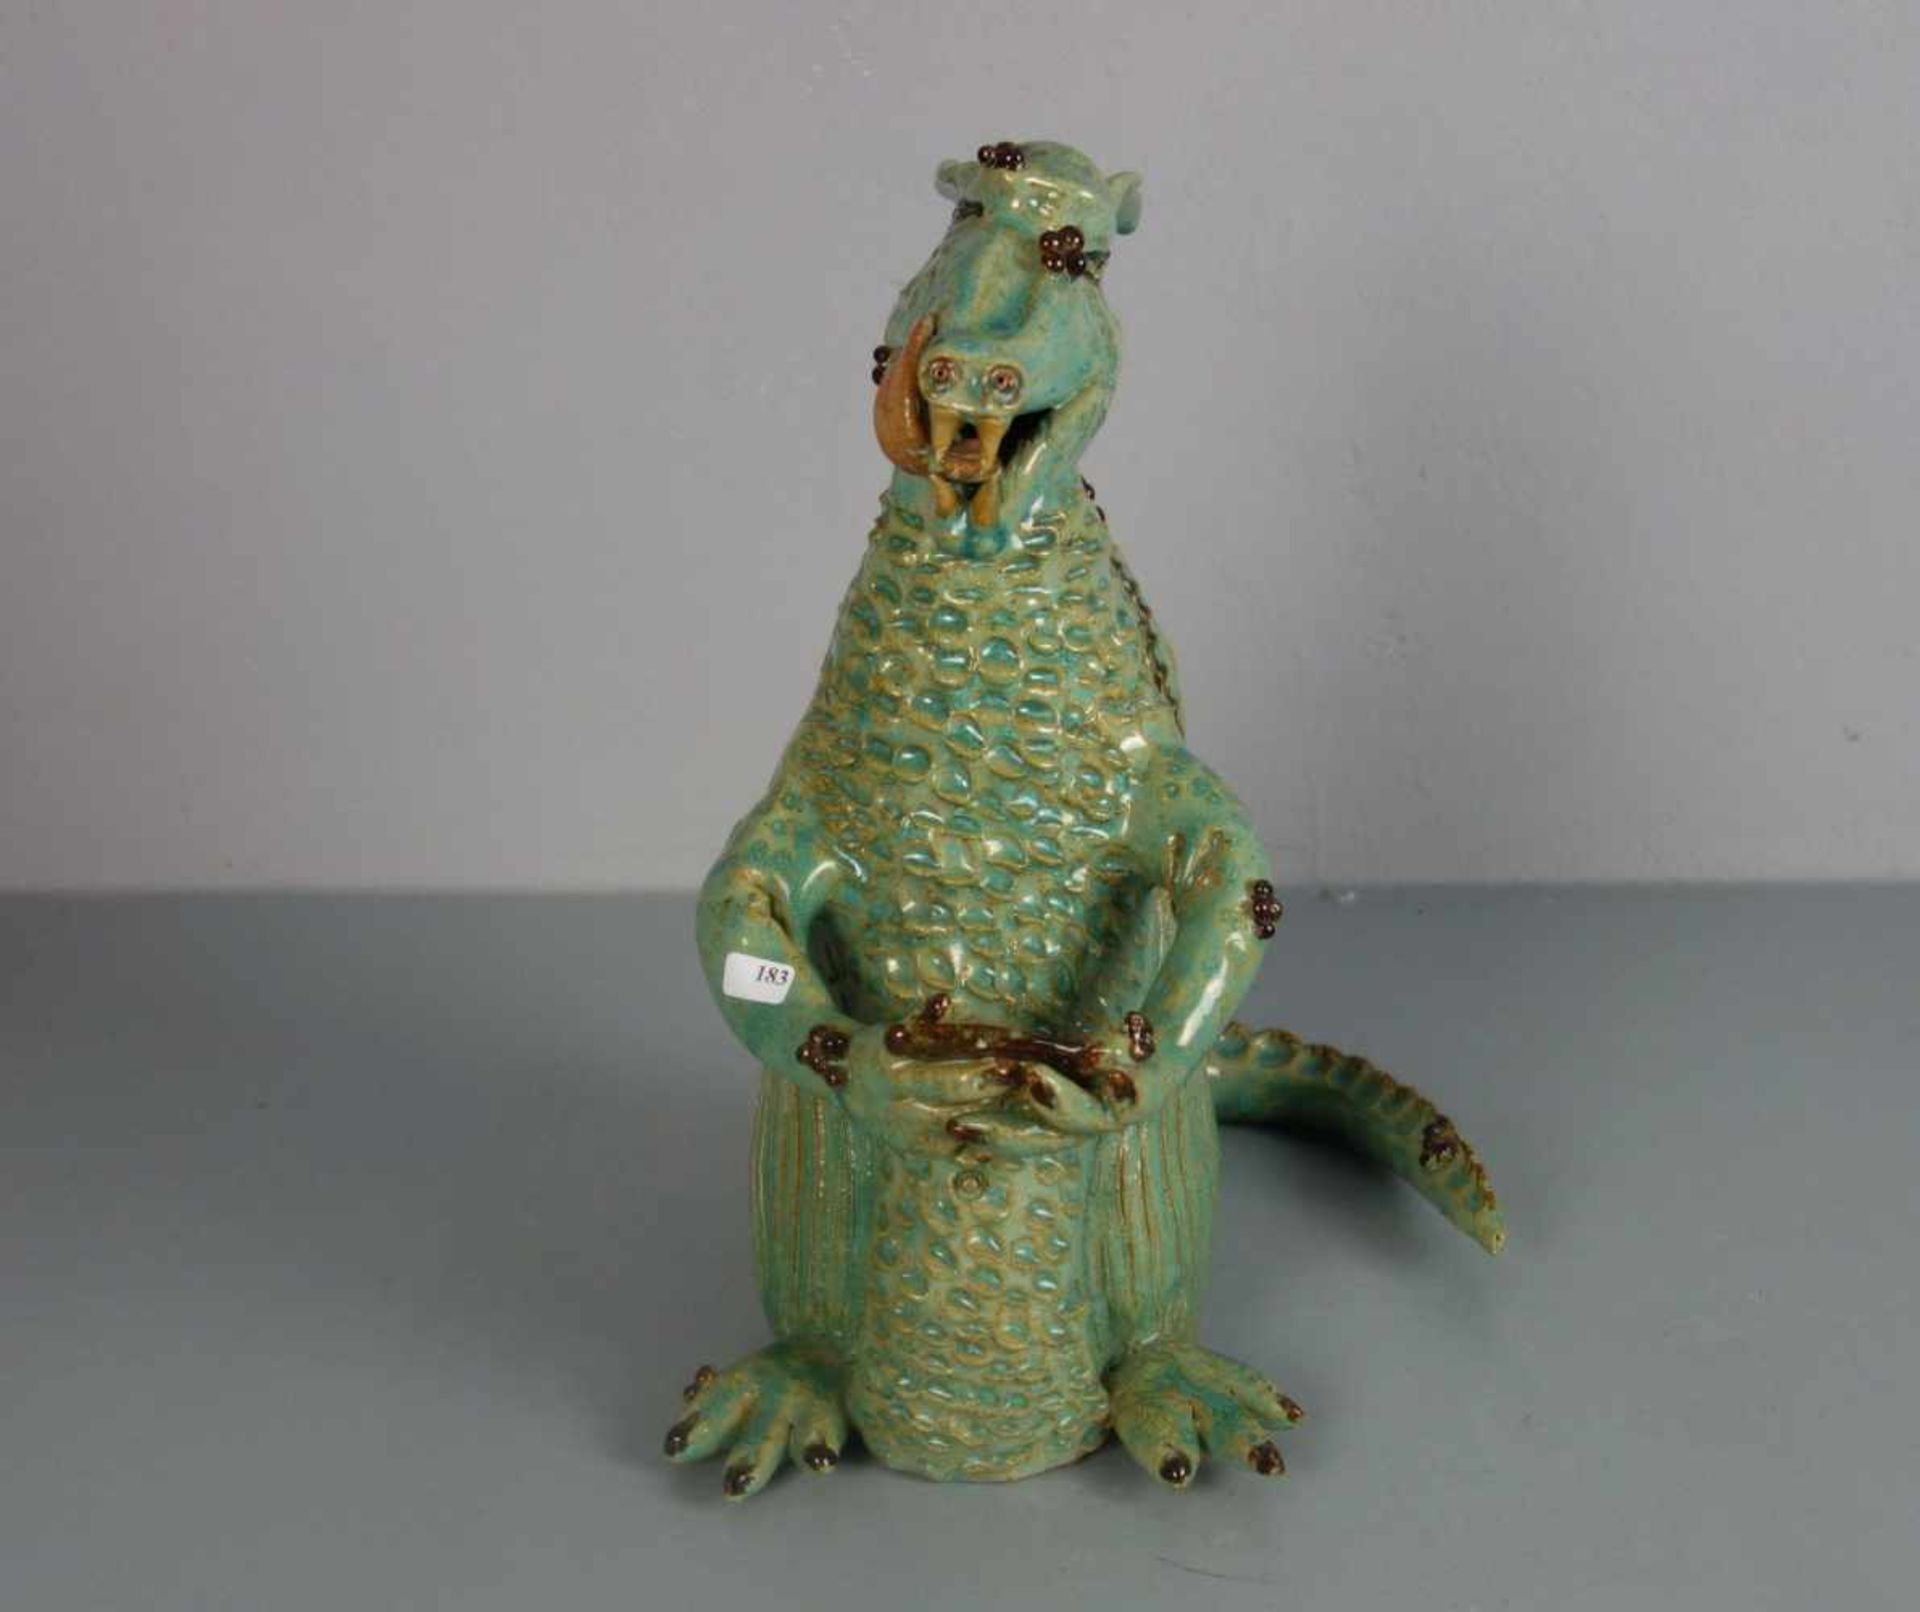 KERAMIK - SKULPTUR: "Drache" / ceramics: "dragon", Keramik, heller Scherben, grün, braun und rot